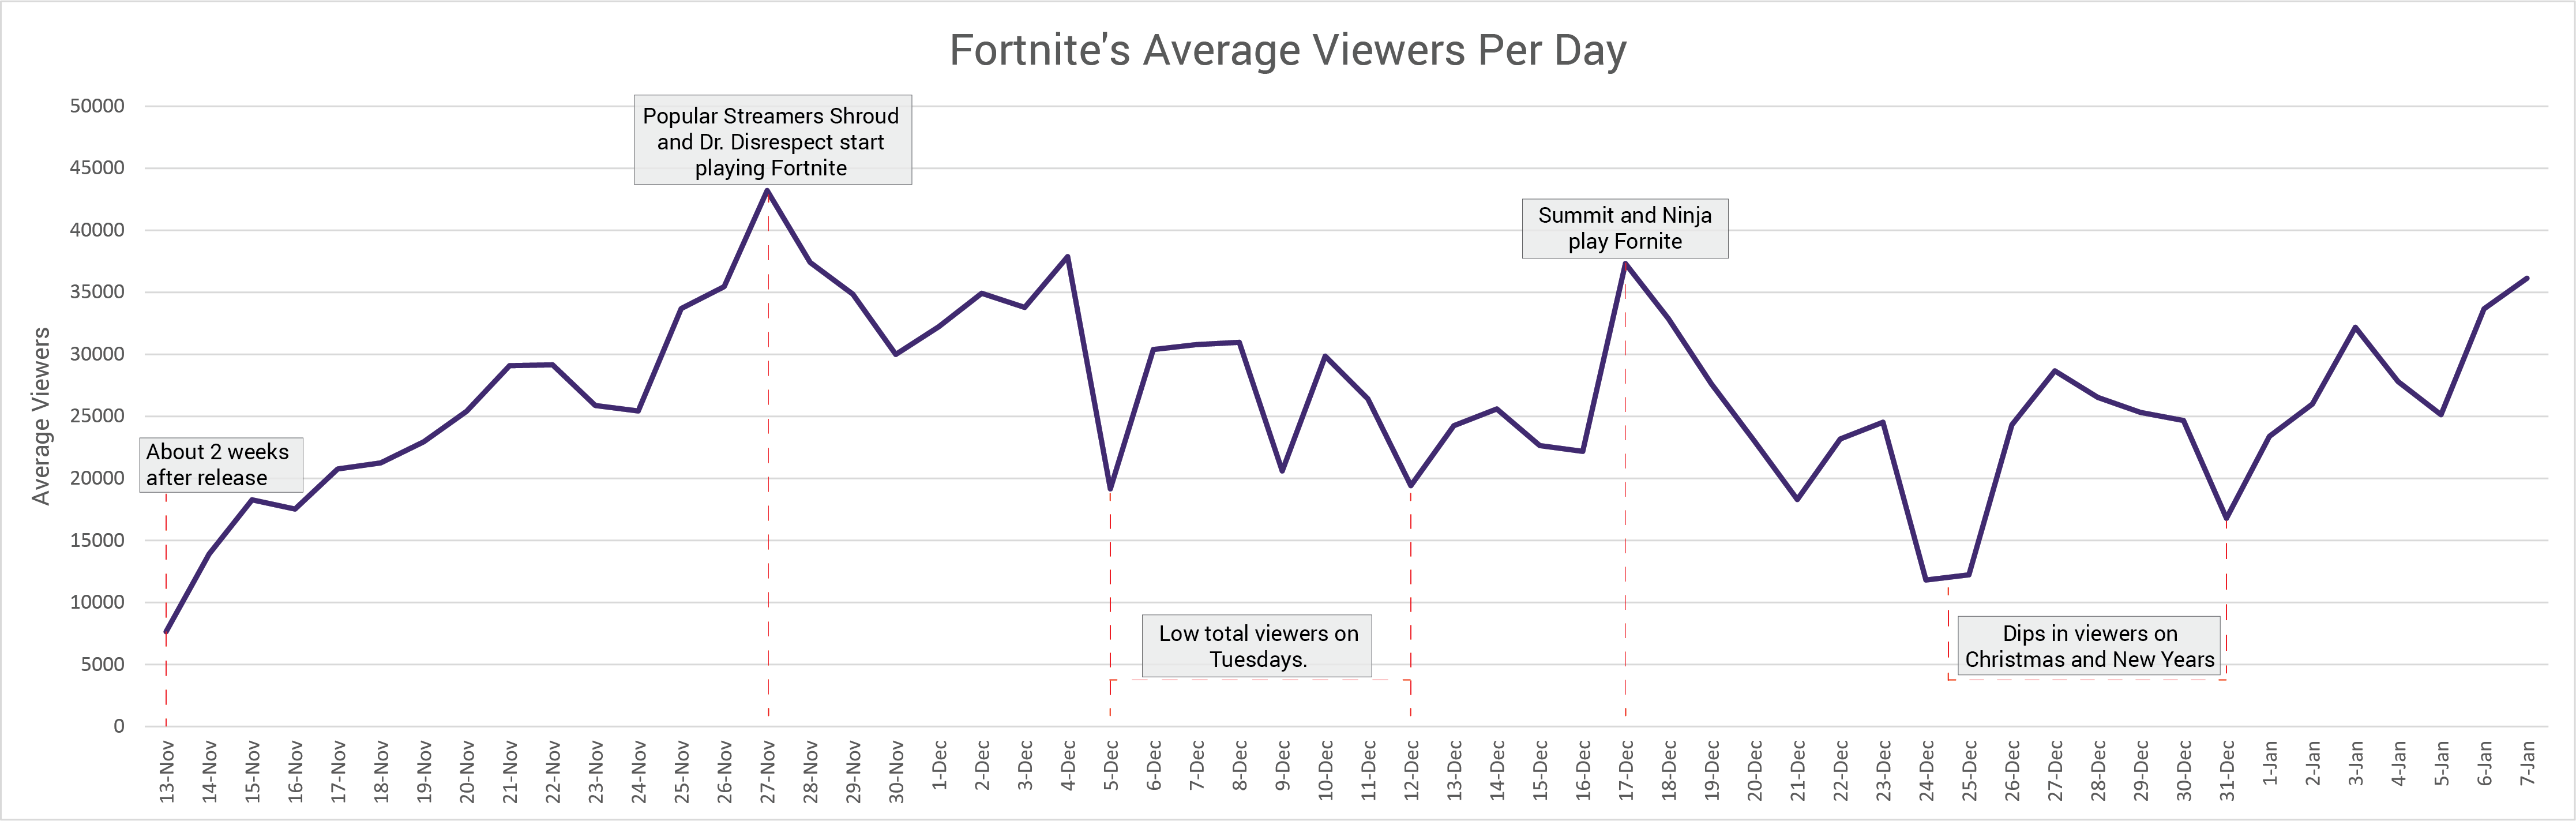 Average Fortnite Viewers